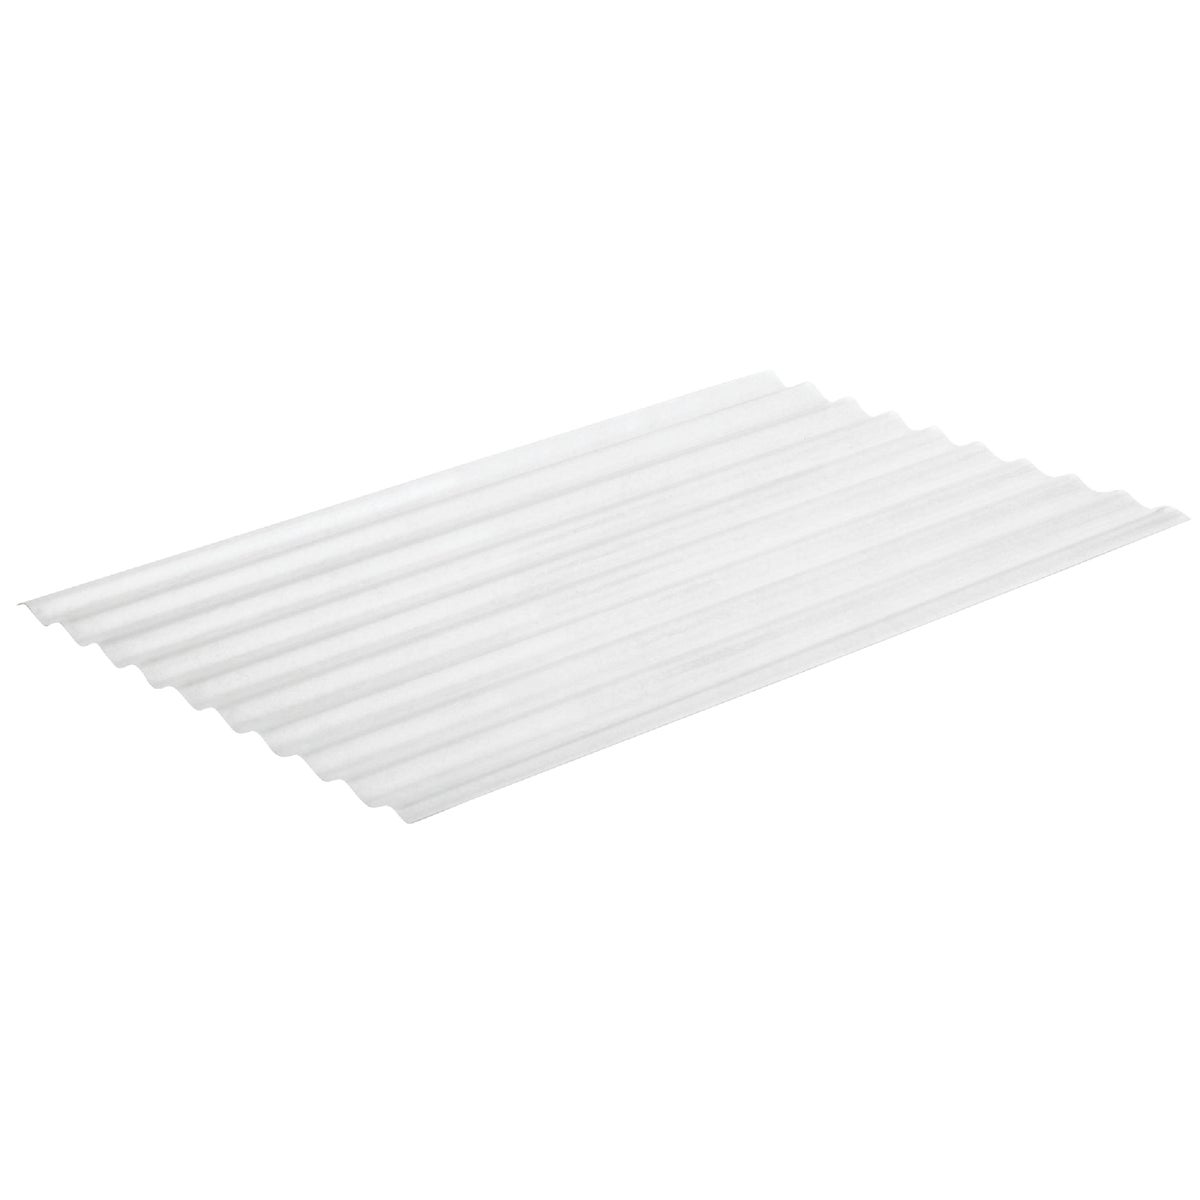 Sequentia Super600 26 In. x 10 Ft. White Round Fiberglass Corrugated Panels